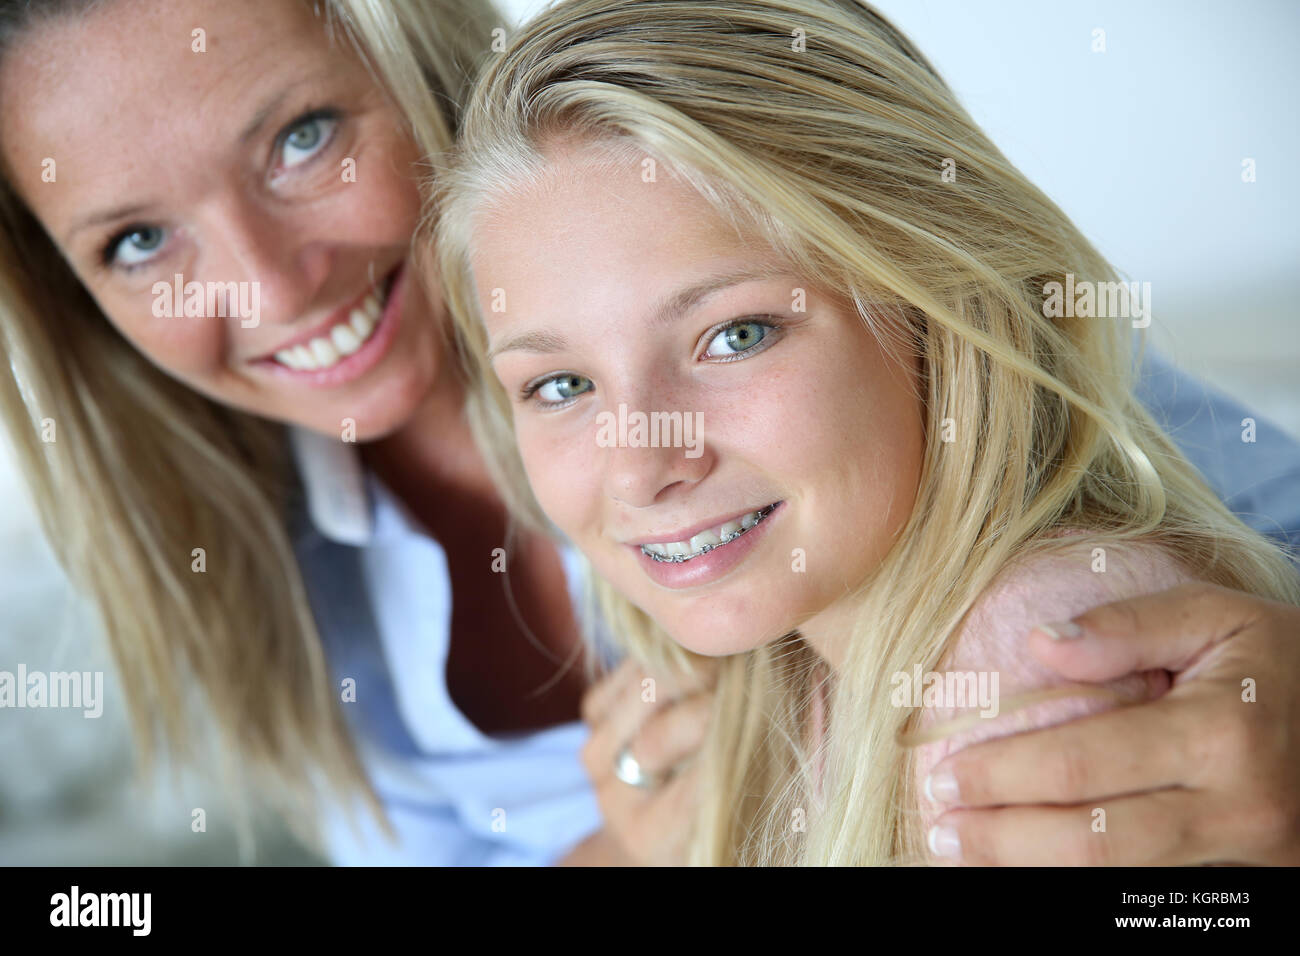 Mom And Teen Facial